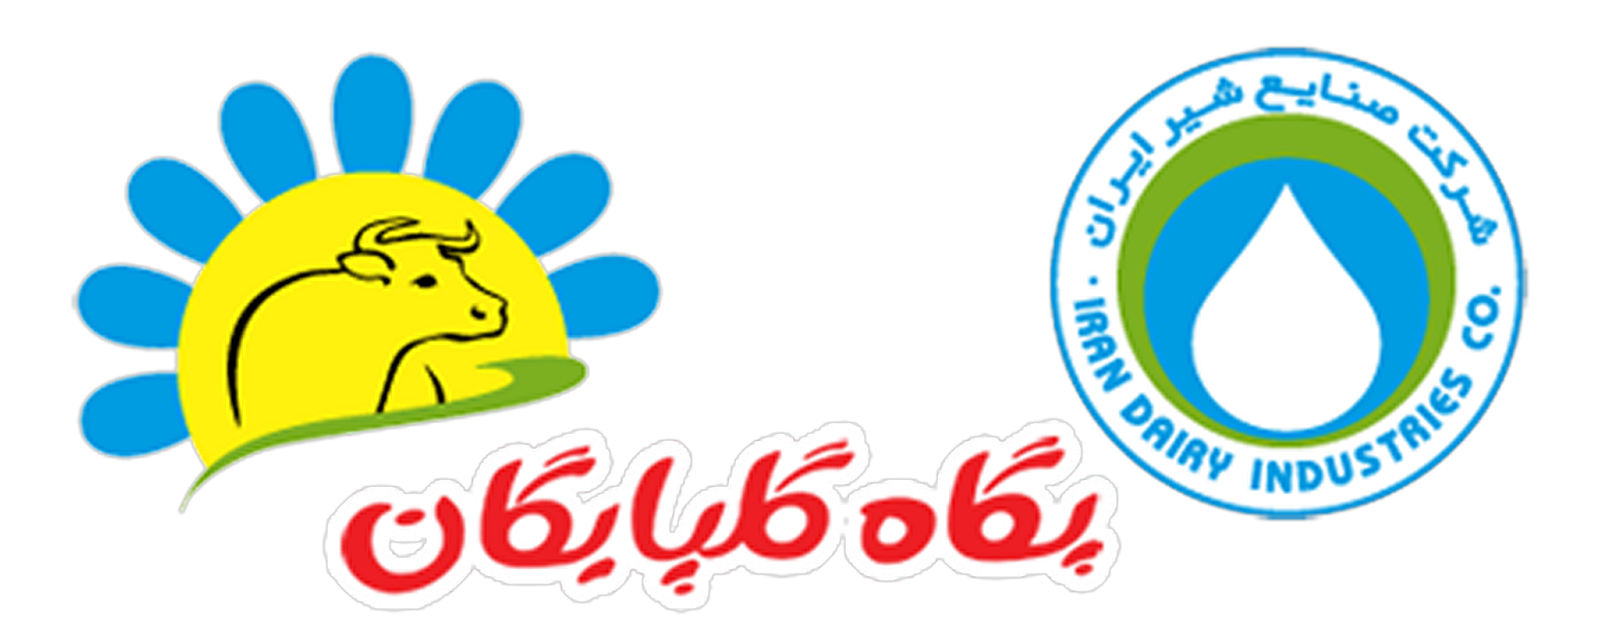 logo6-1 [1600x1200]